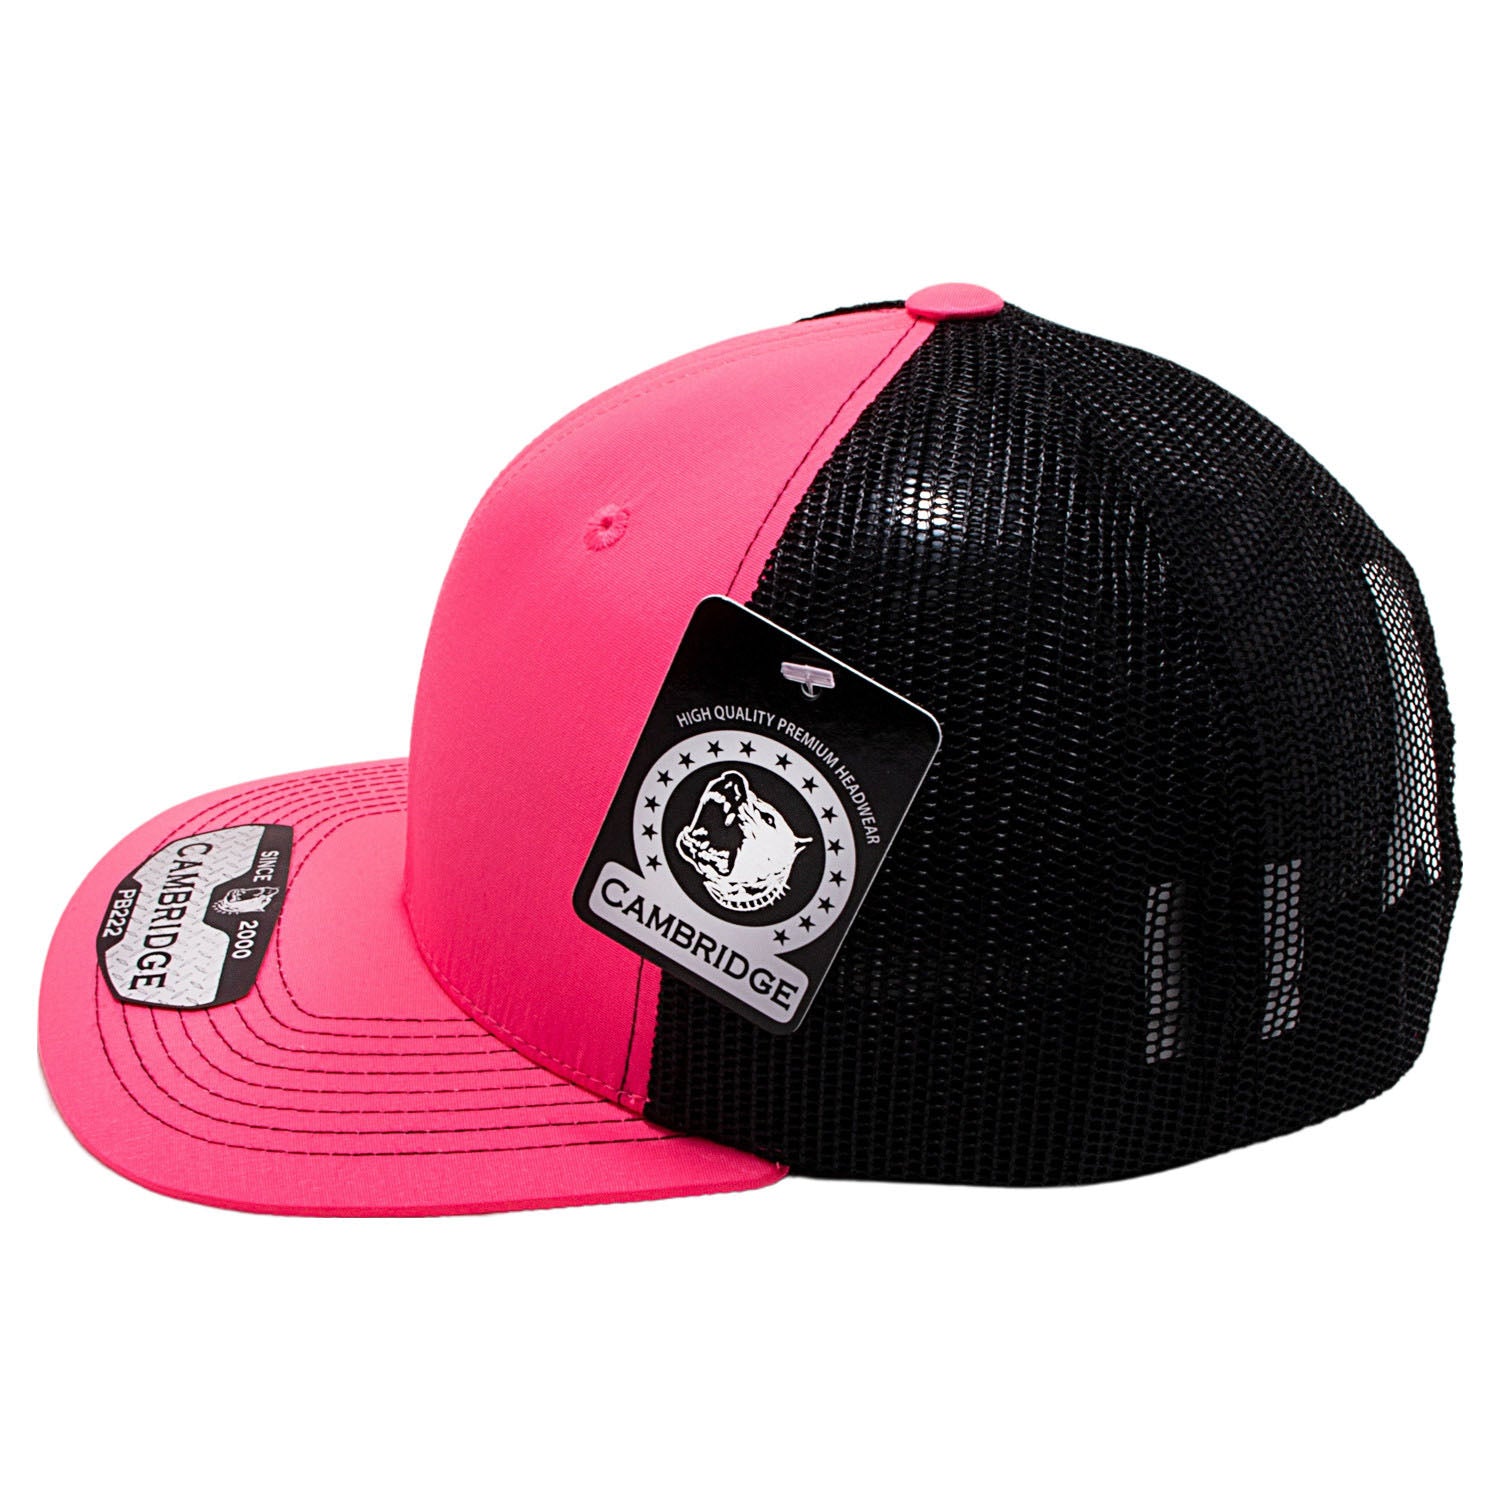 PB222N Pit Bull Cambridge Neon Trucker Hat [Neon Pink/Black] – CHOICE ...